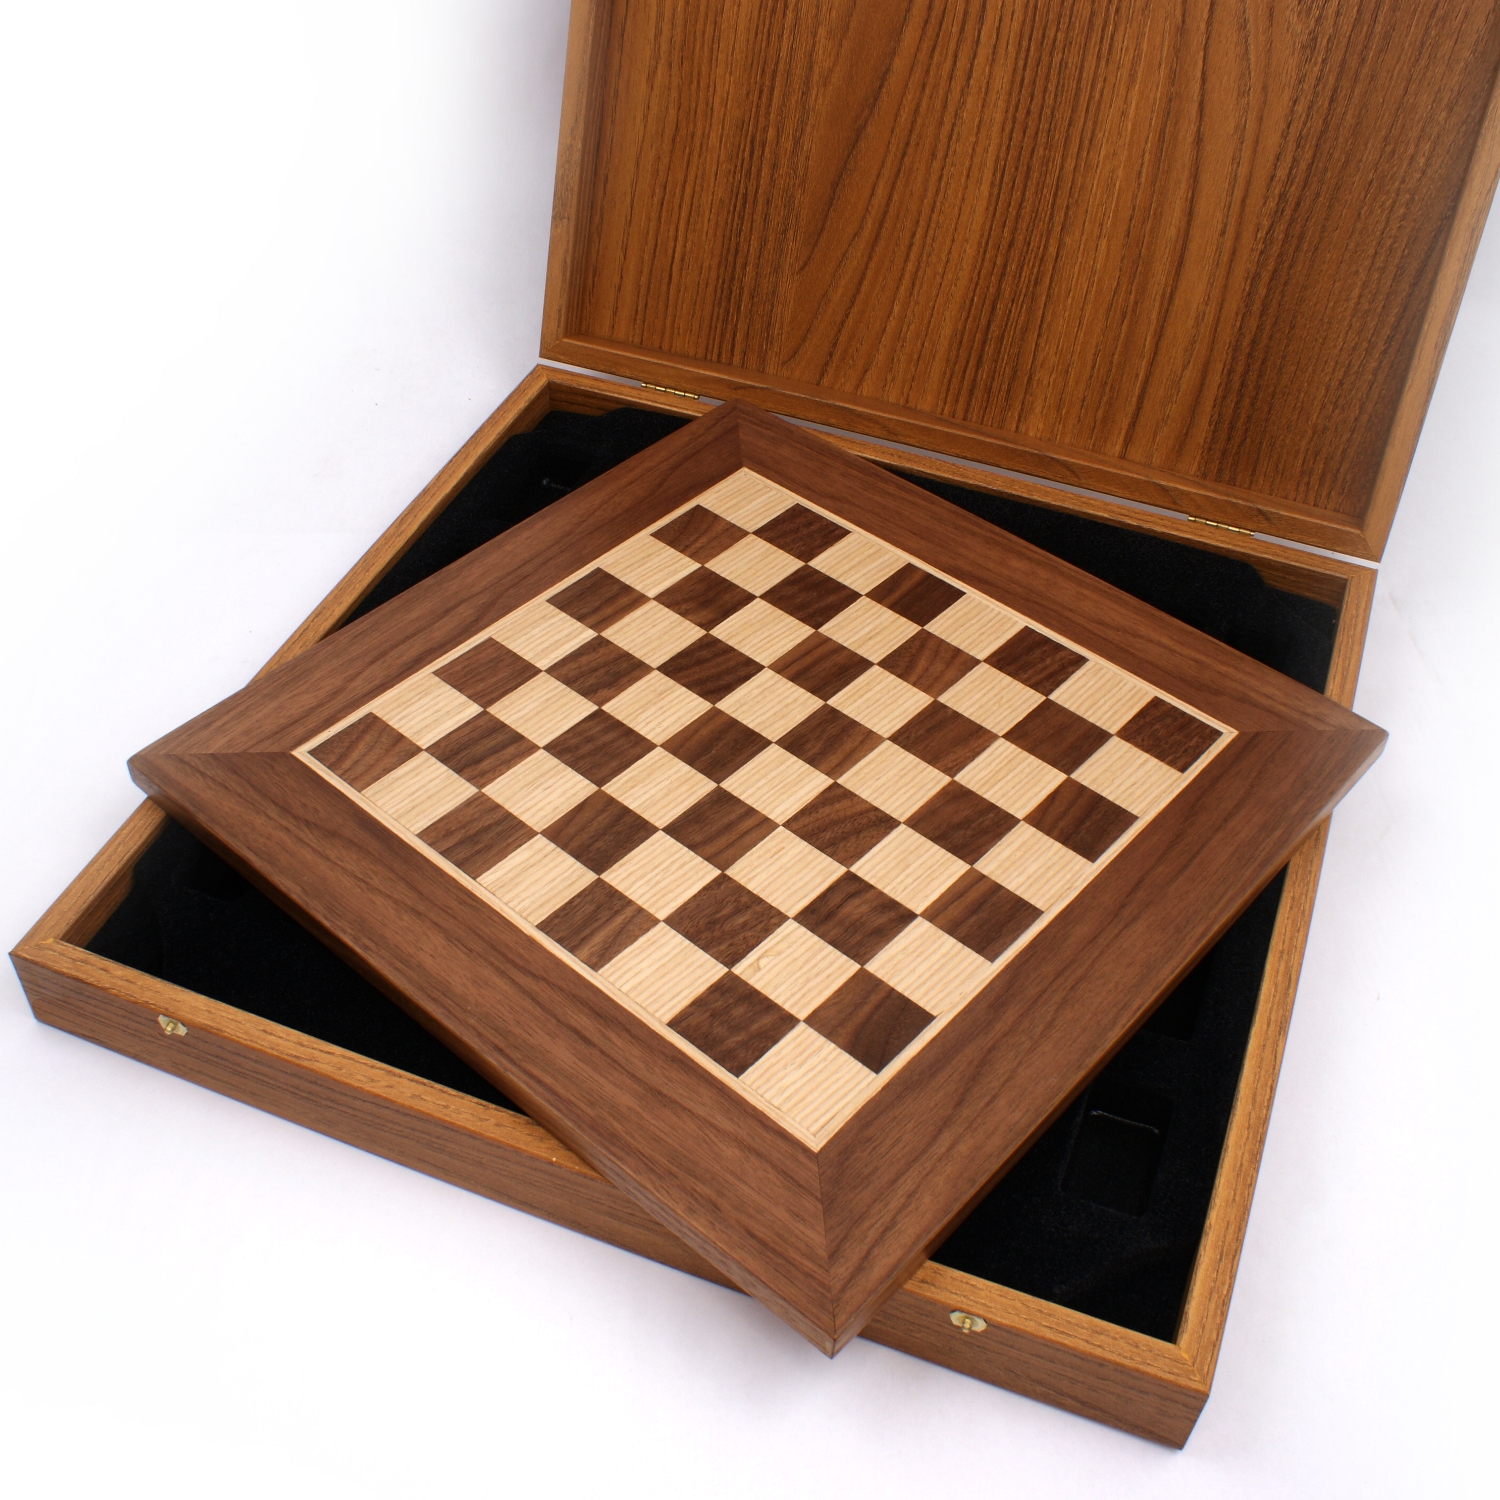 13 Luxury Desktop Archers Metal Chess Set with Case